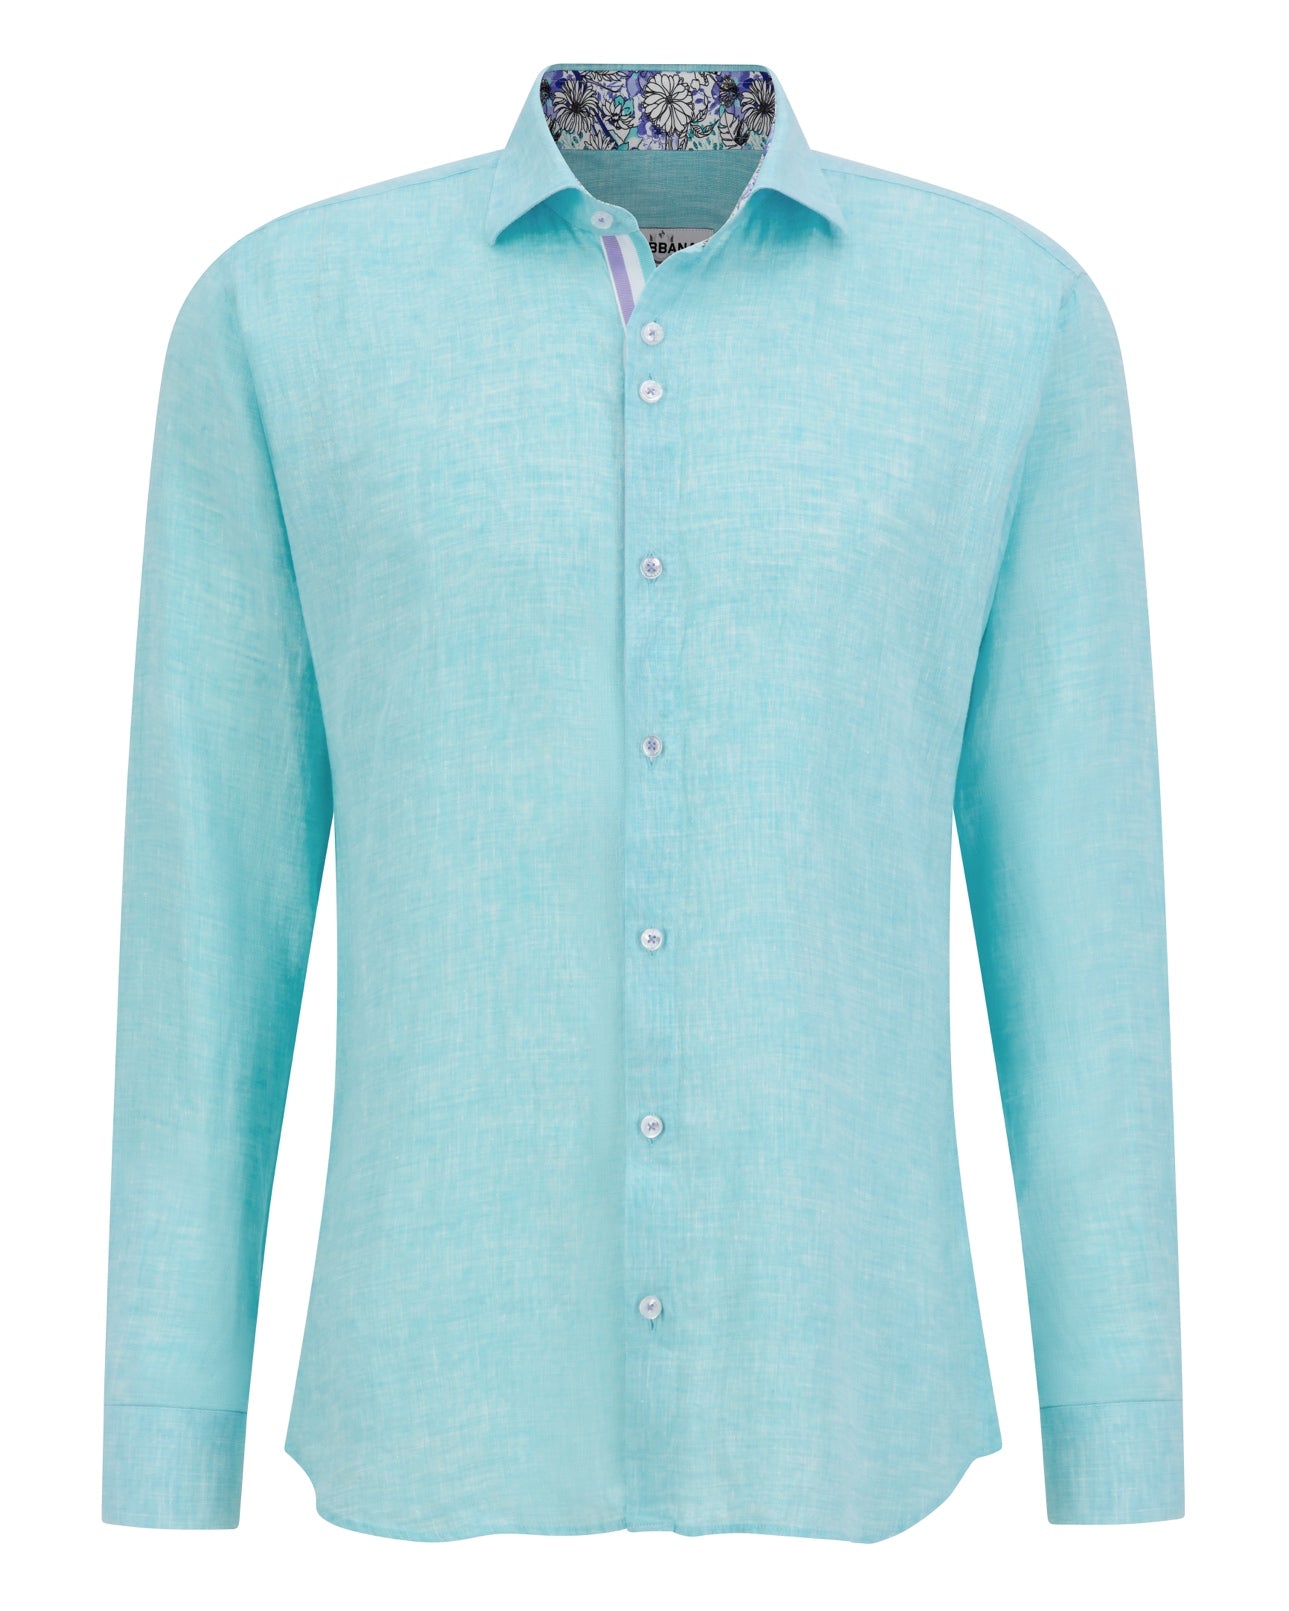 Persepolis Linen Shirt - Turquoise